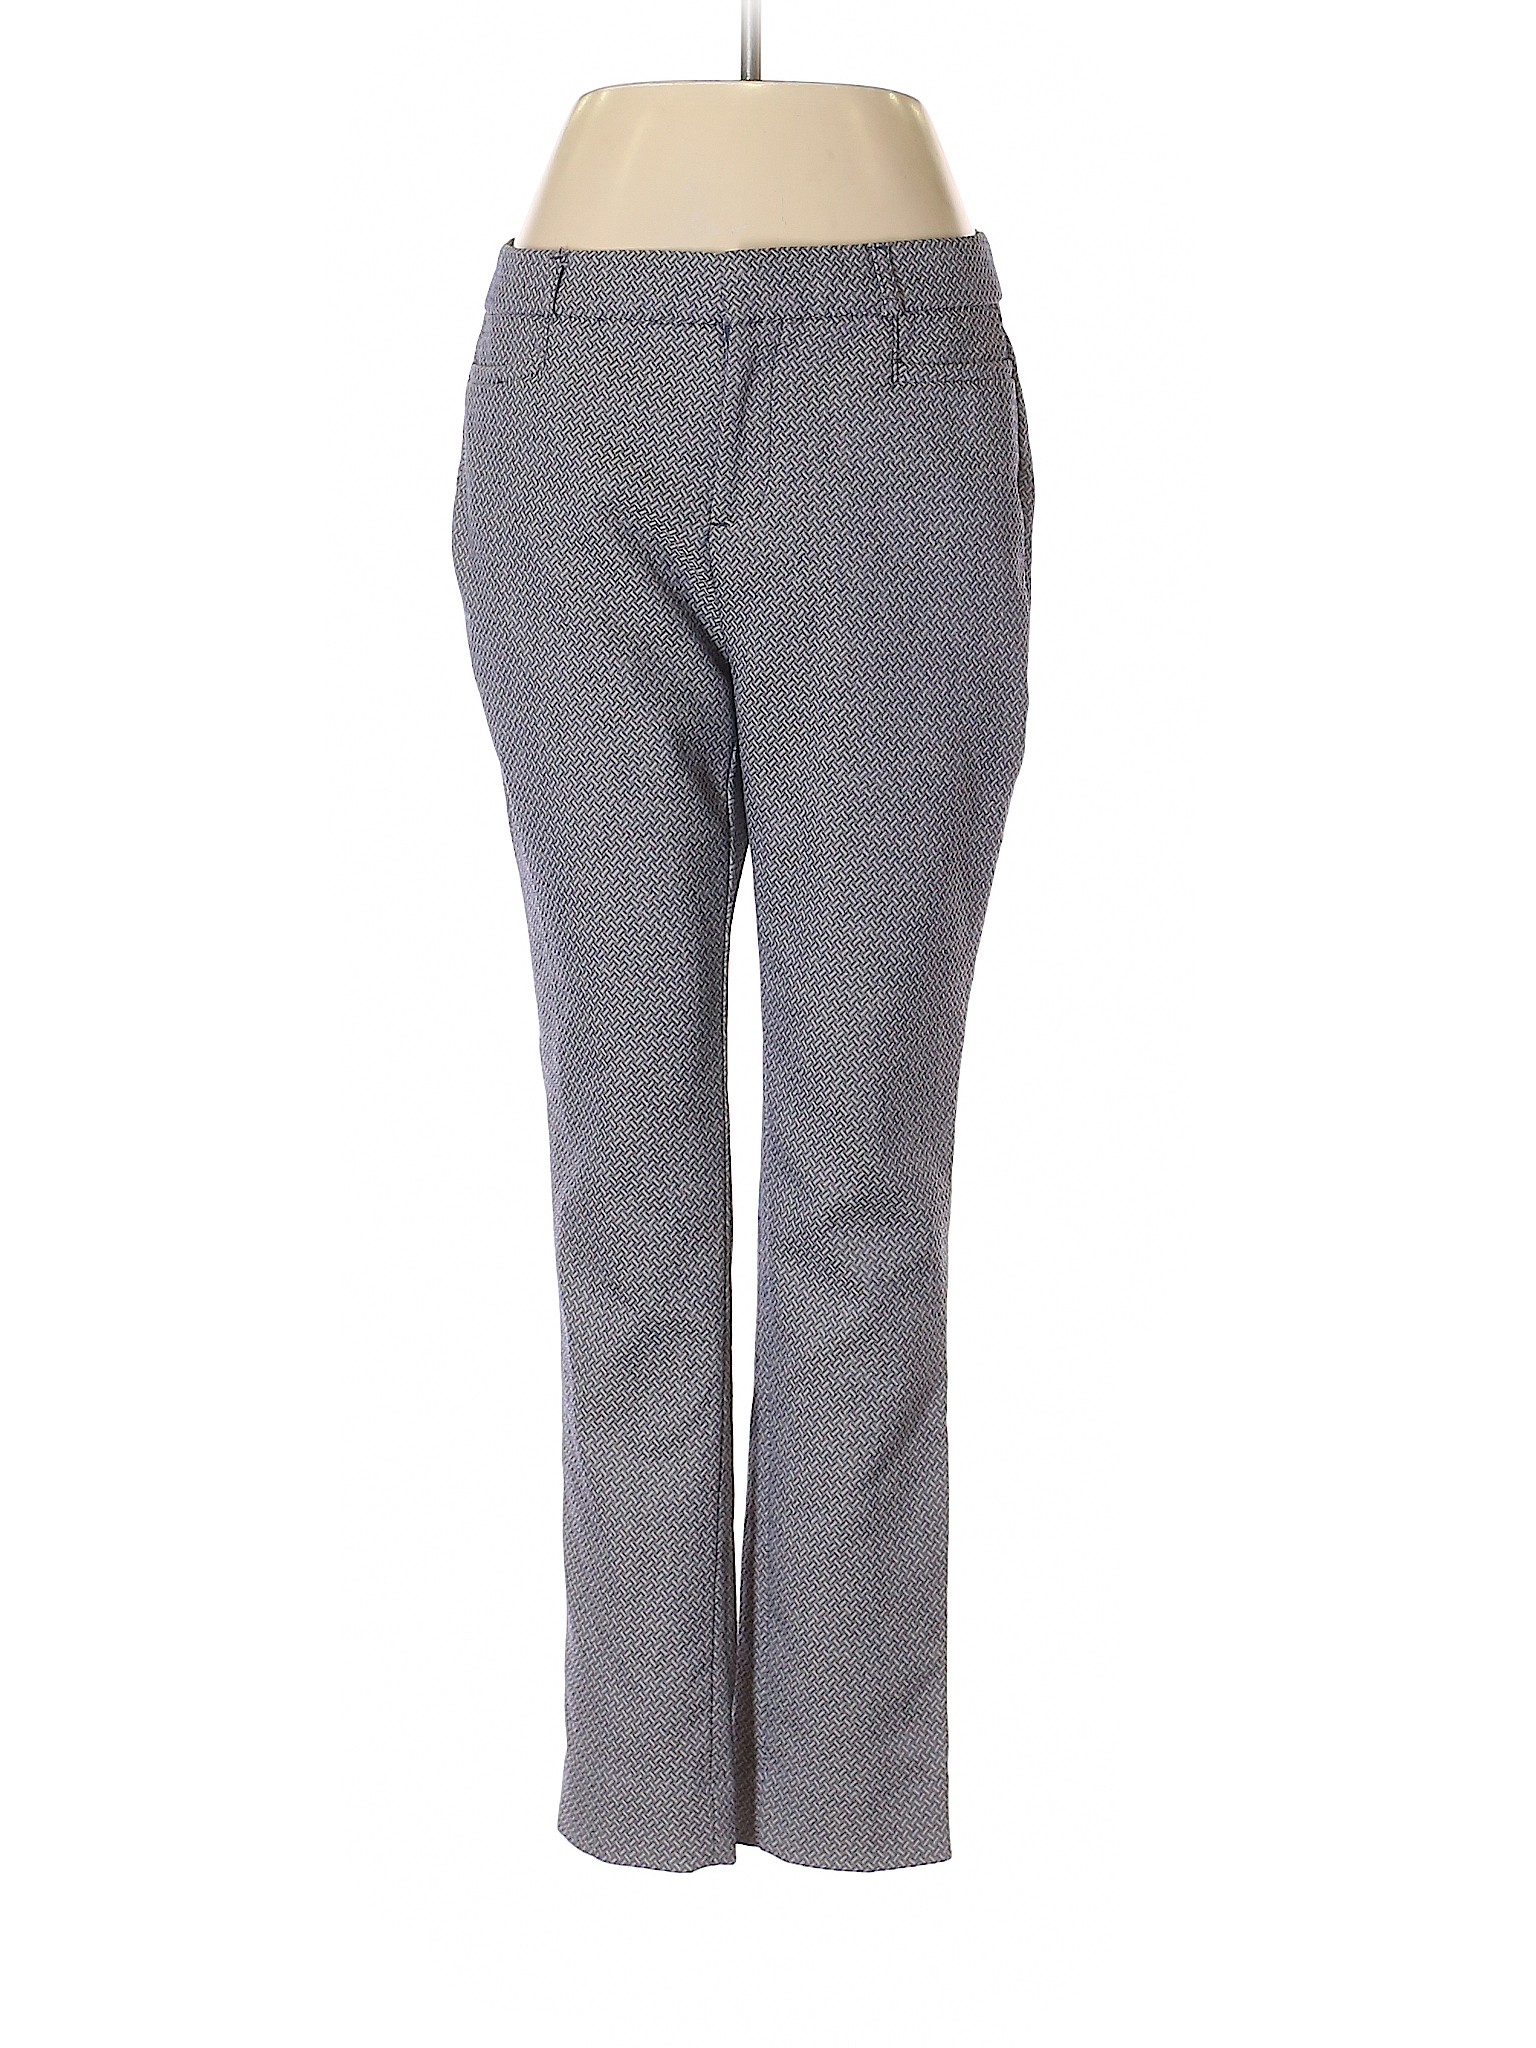 Banana Republic Women Gray Dress Pants 4 | eBay